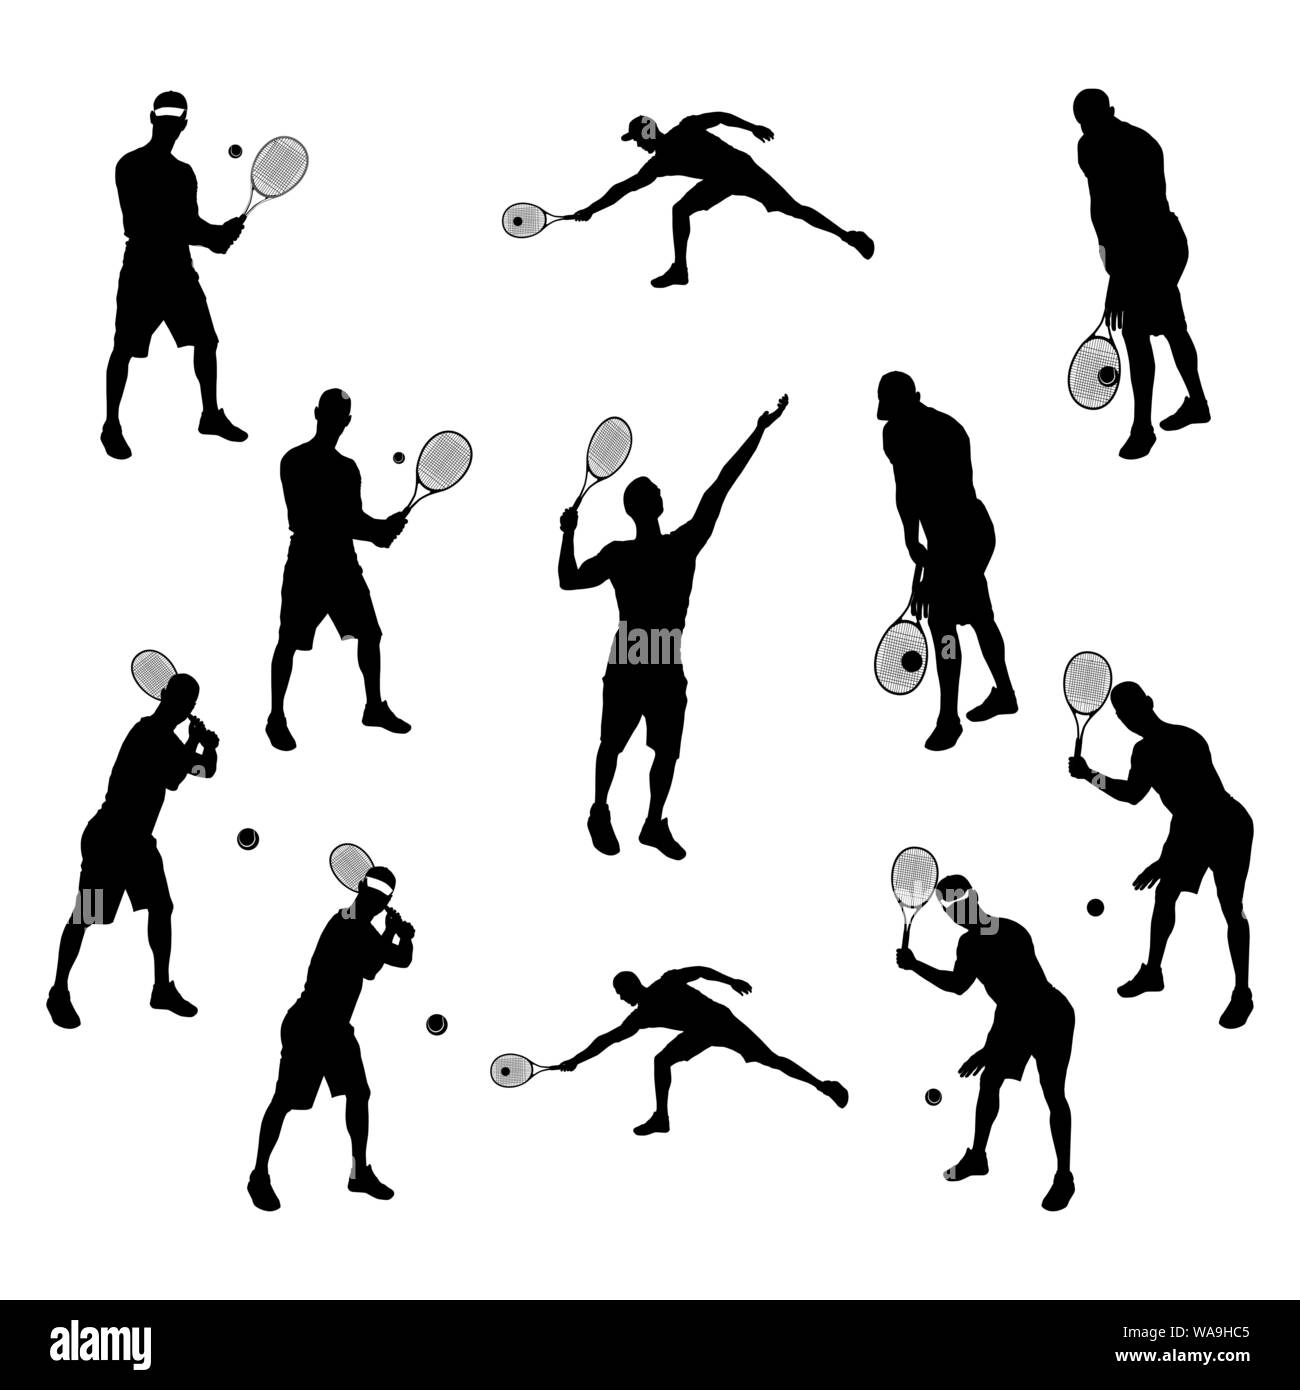 Tennis player black silhouette set on white background, vector illustration Stock Vector